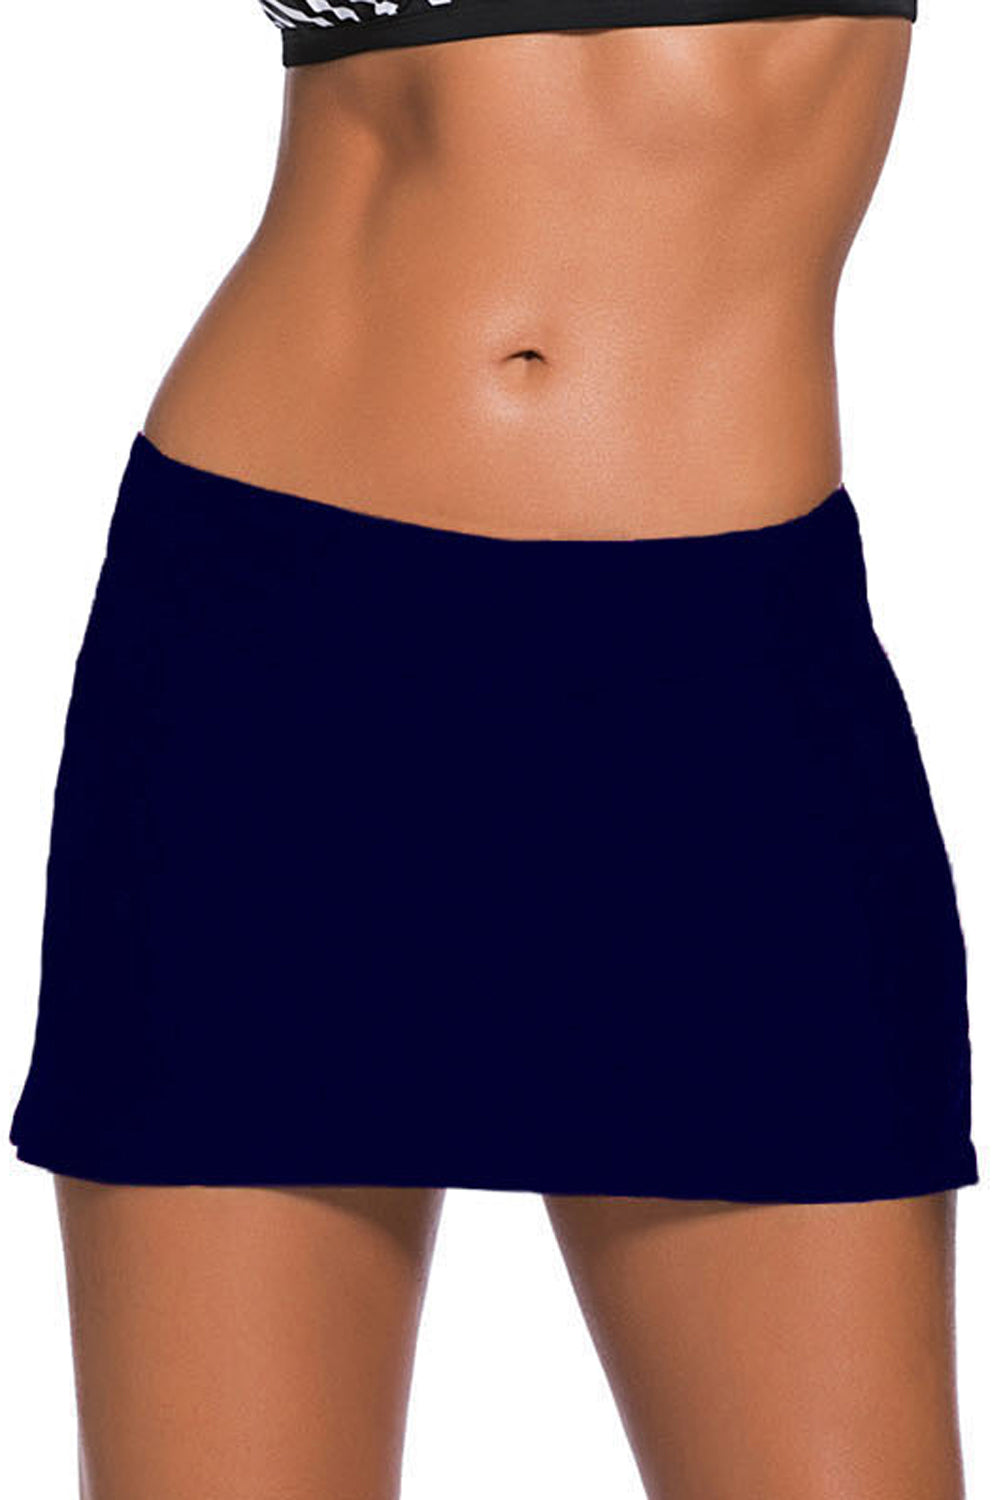 Plus Size Tummy Control Swim Skirt Bathing Suit Bottom for Women